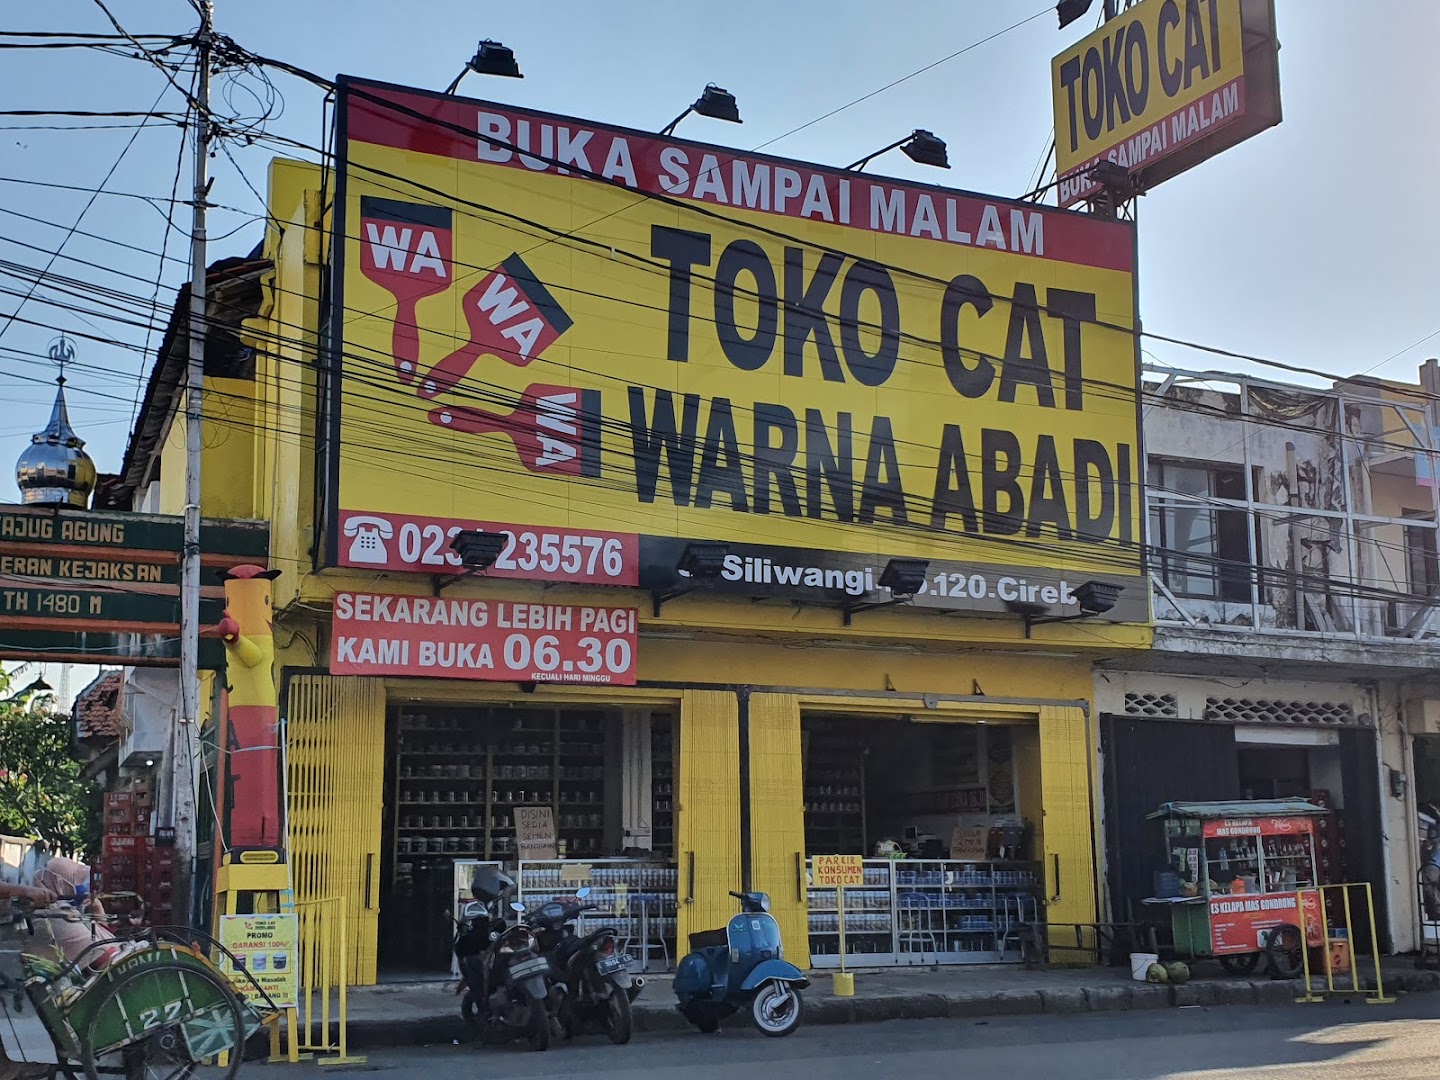 Toko Cat Warna Abadi Cirebon Photo